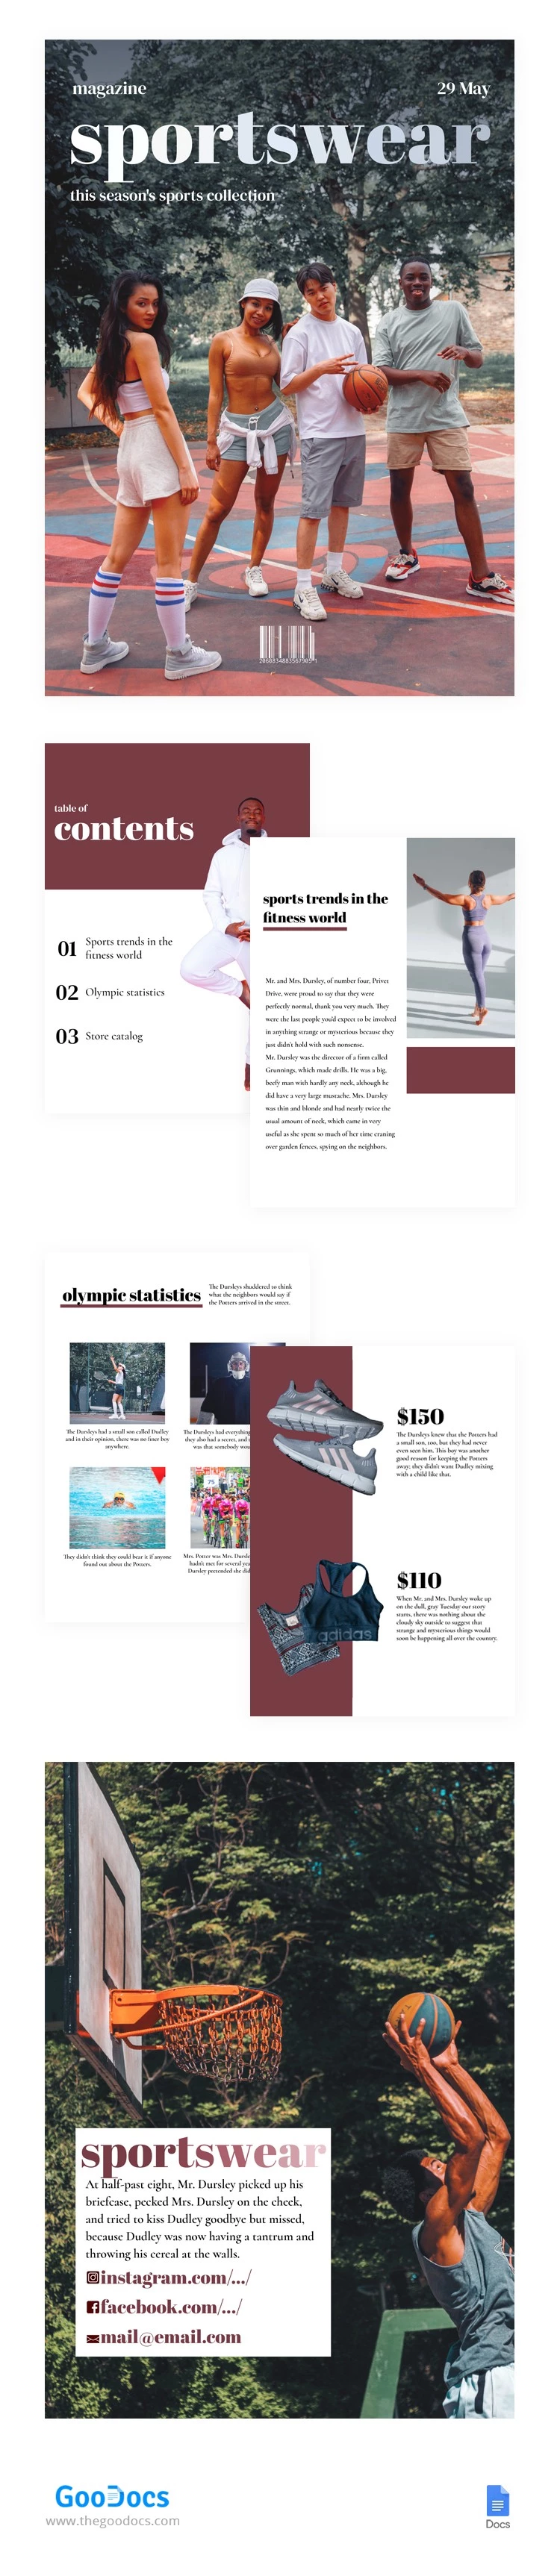 Sportswear Magazin - free Google Docs Template - 10062510